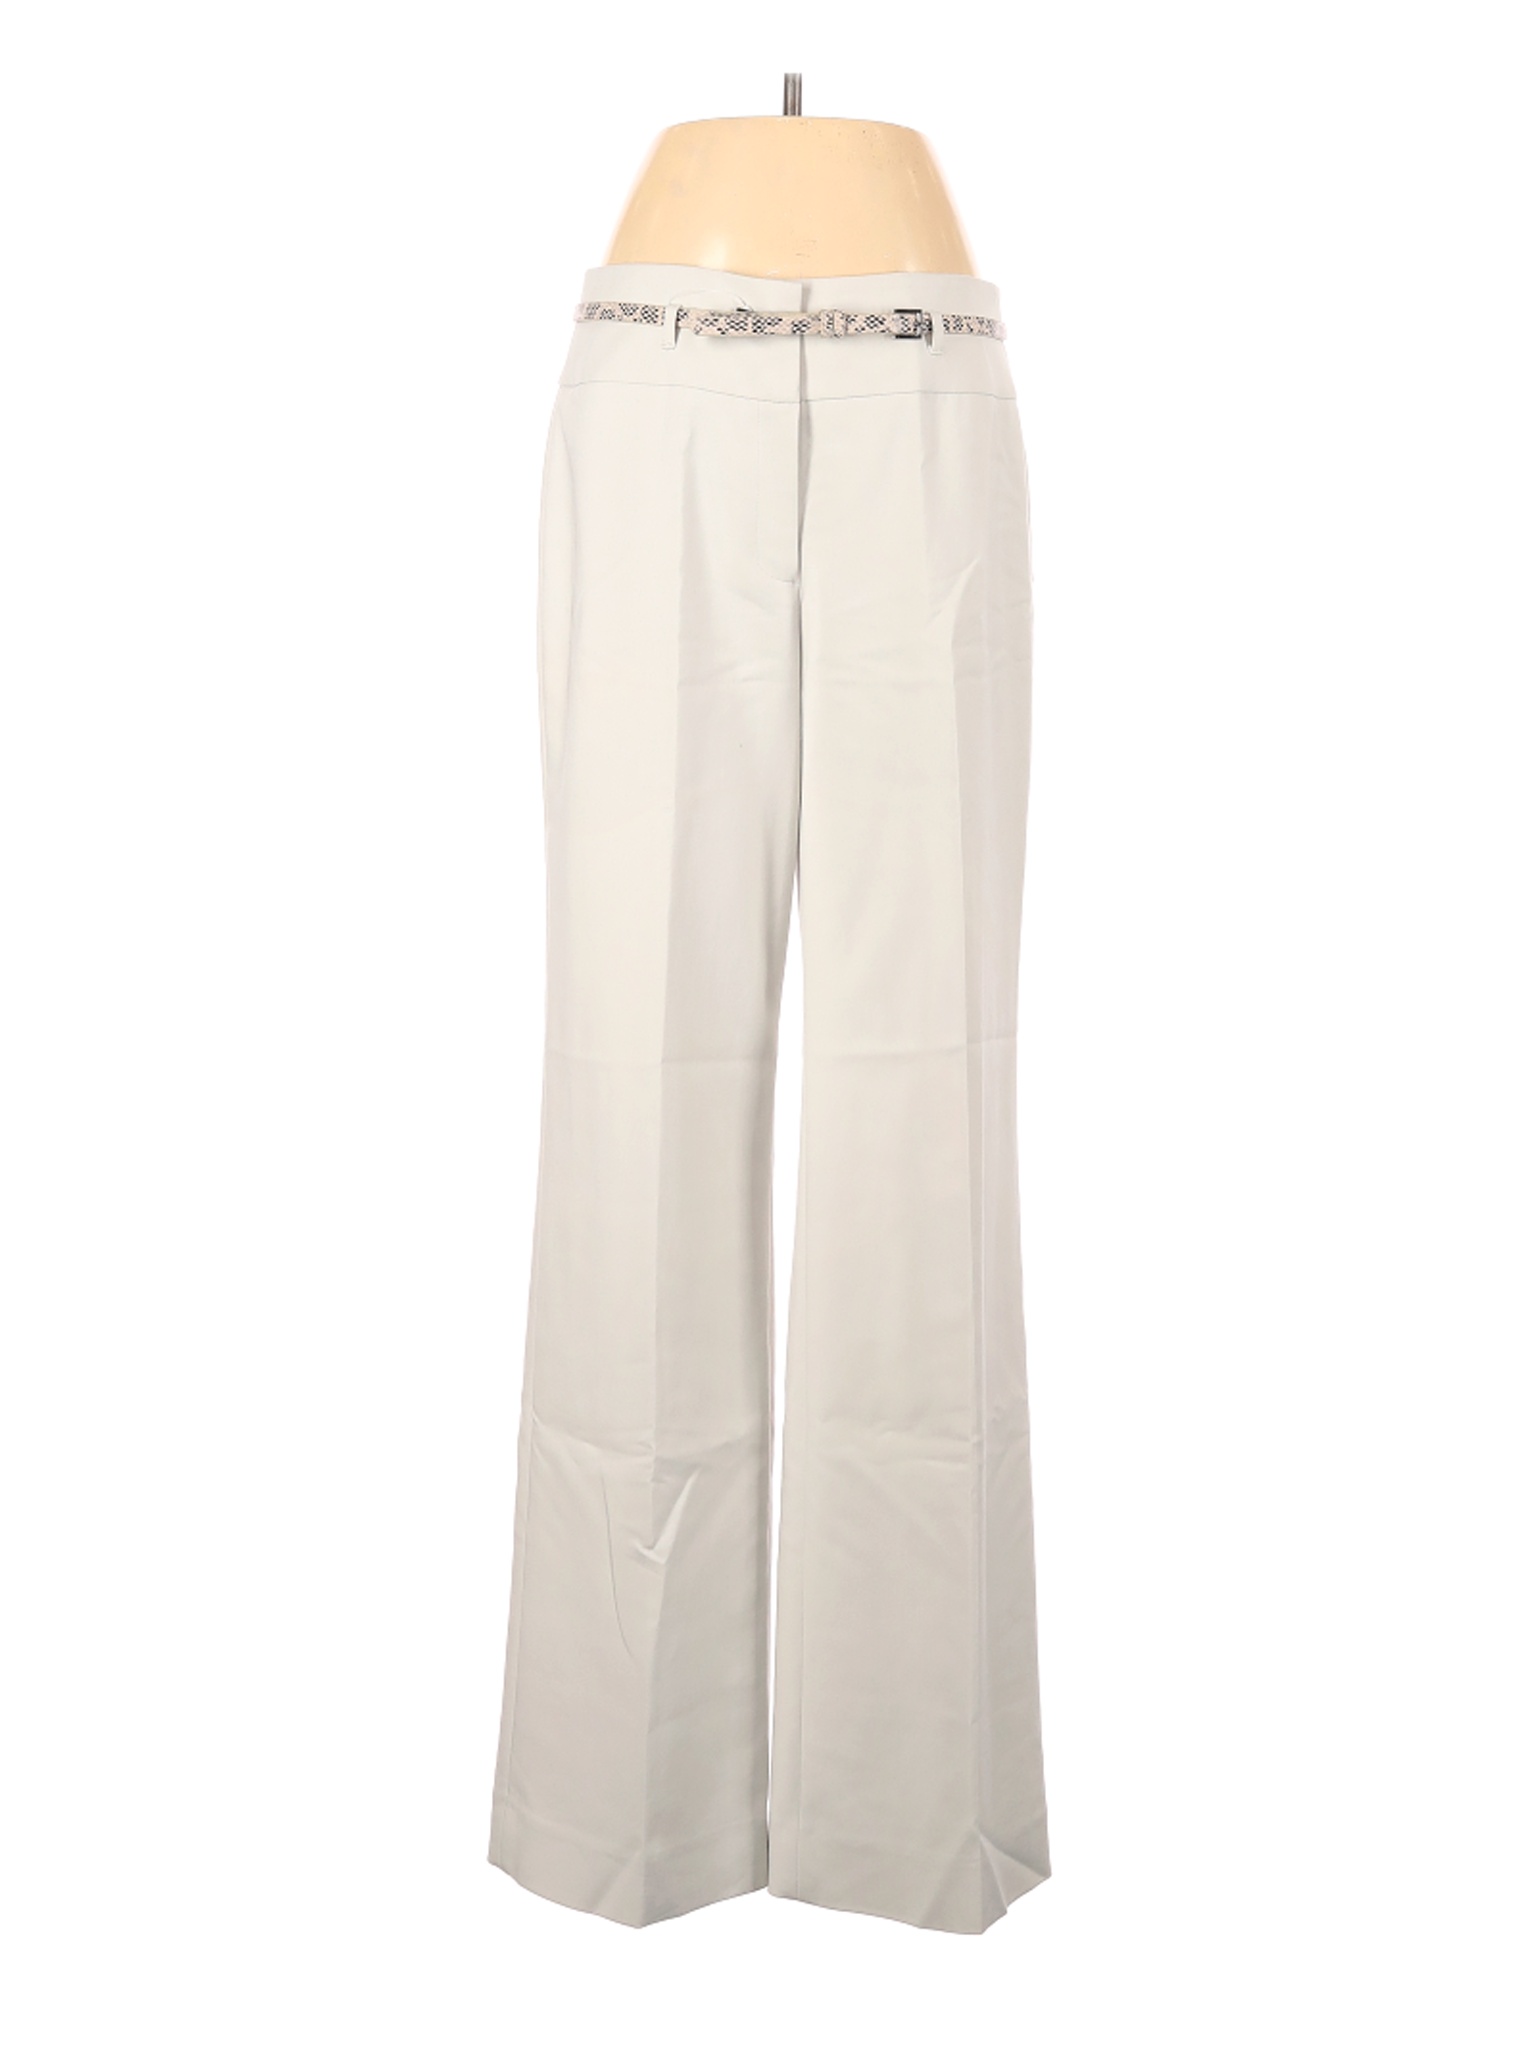 Antonio Melani Women Ivory Dress Pants 8 | eBay